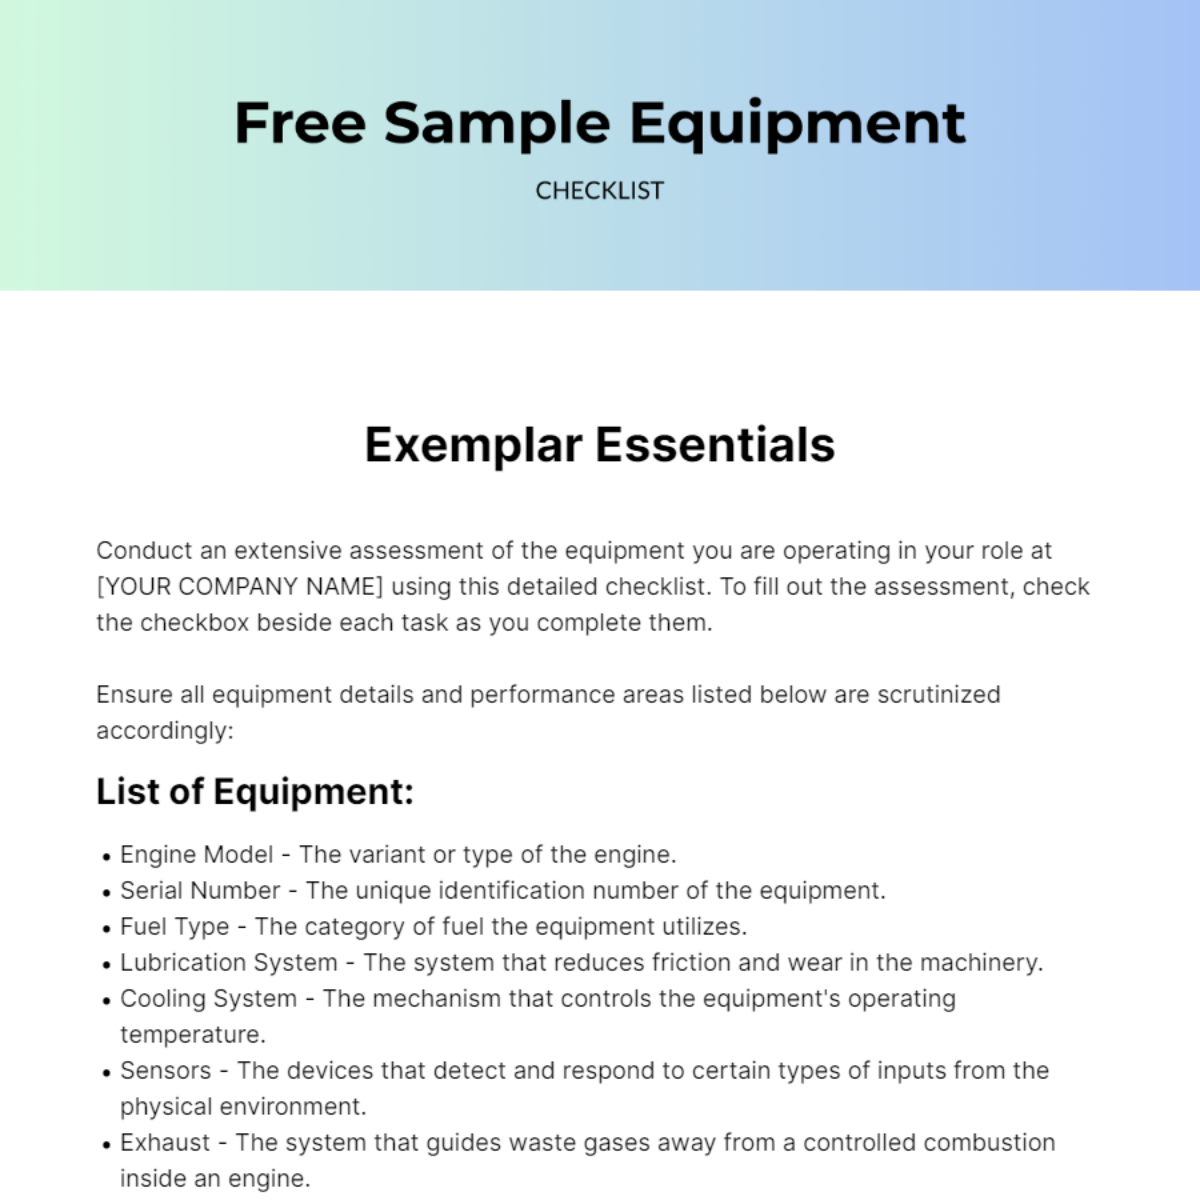 Free Sample Equipment Checklist Template